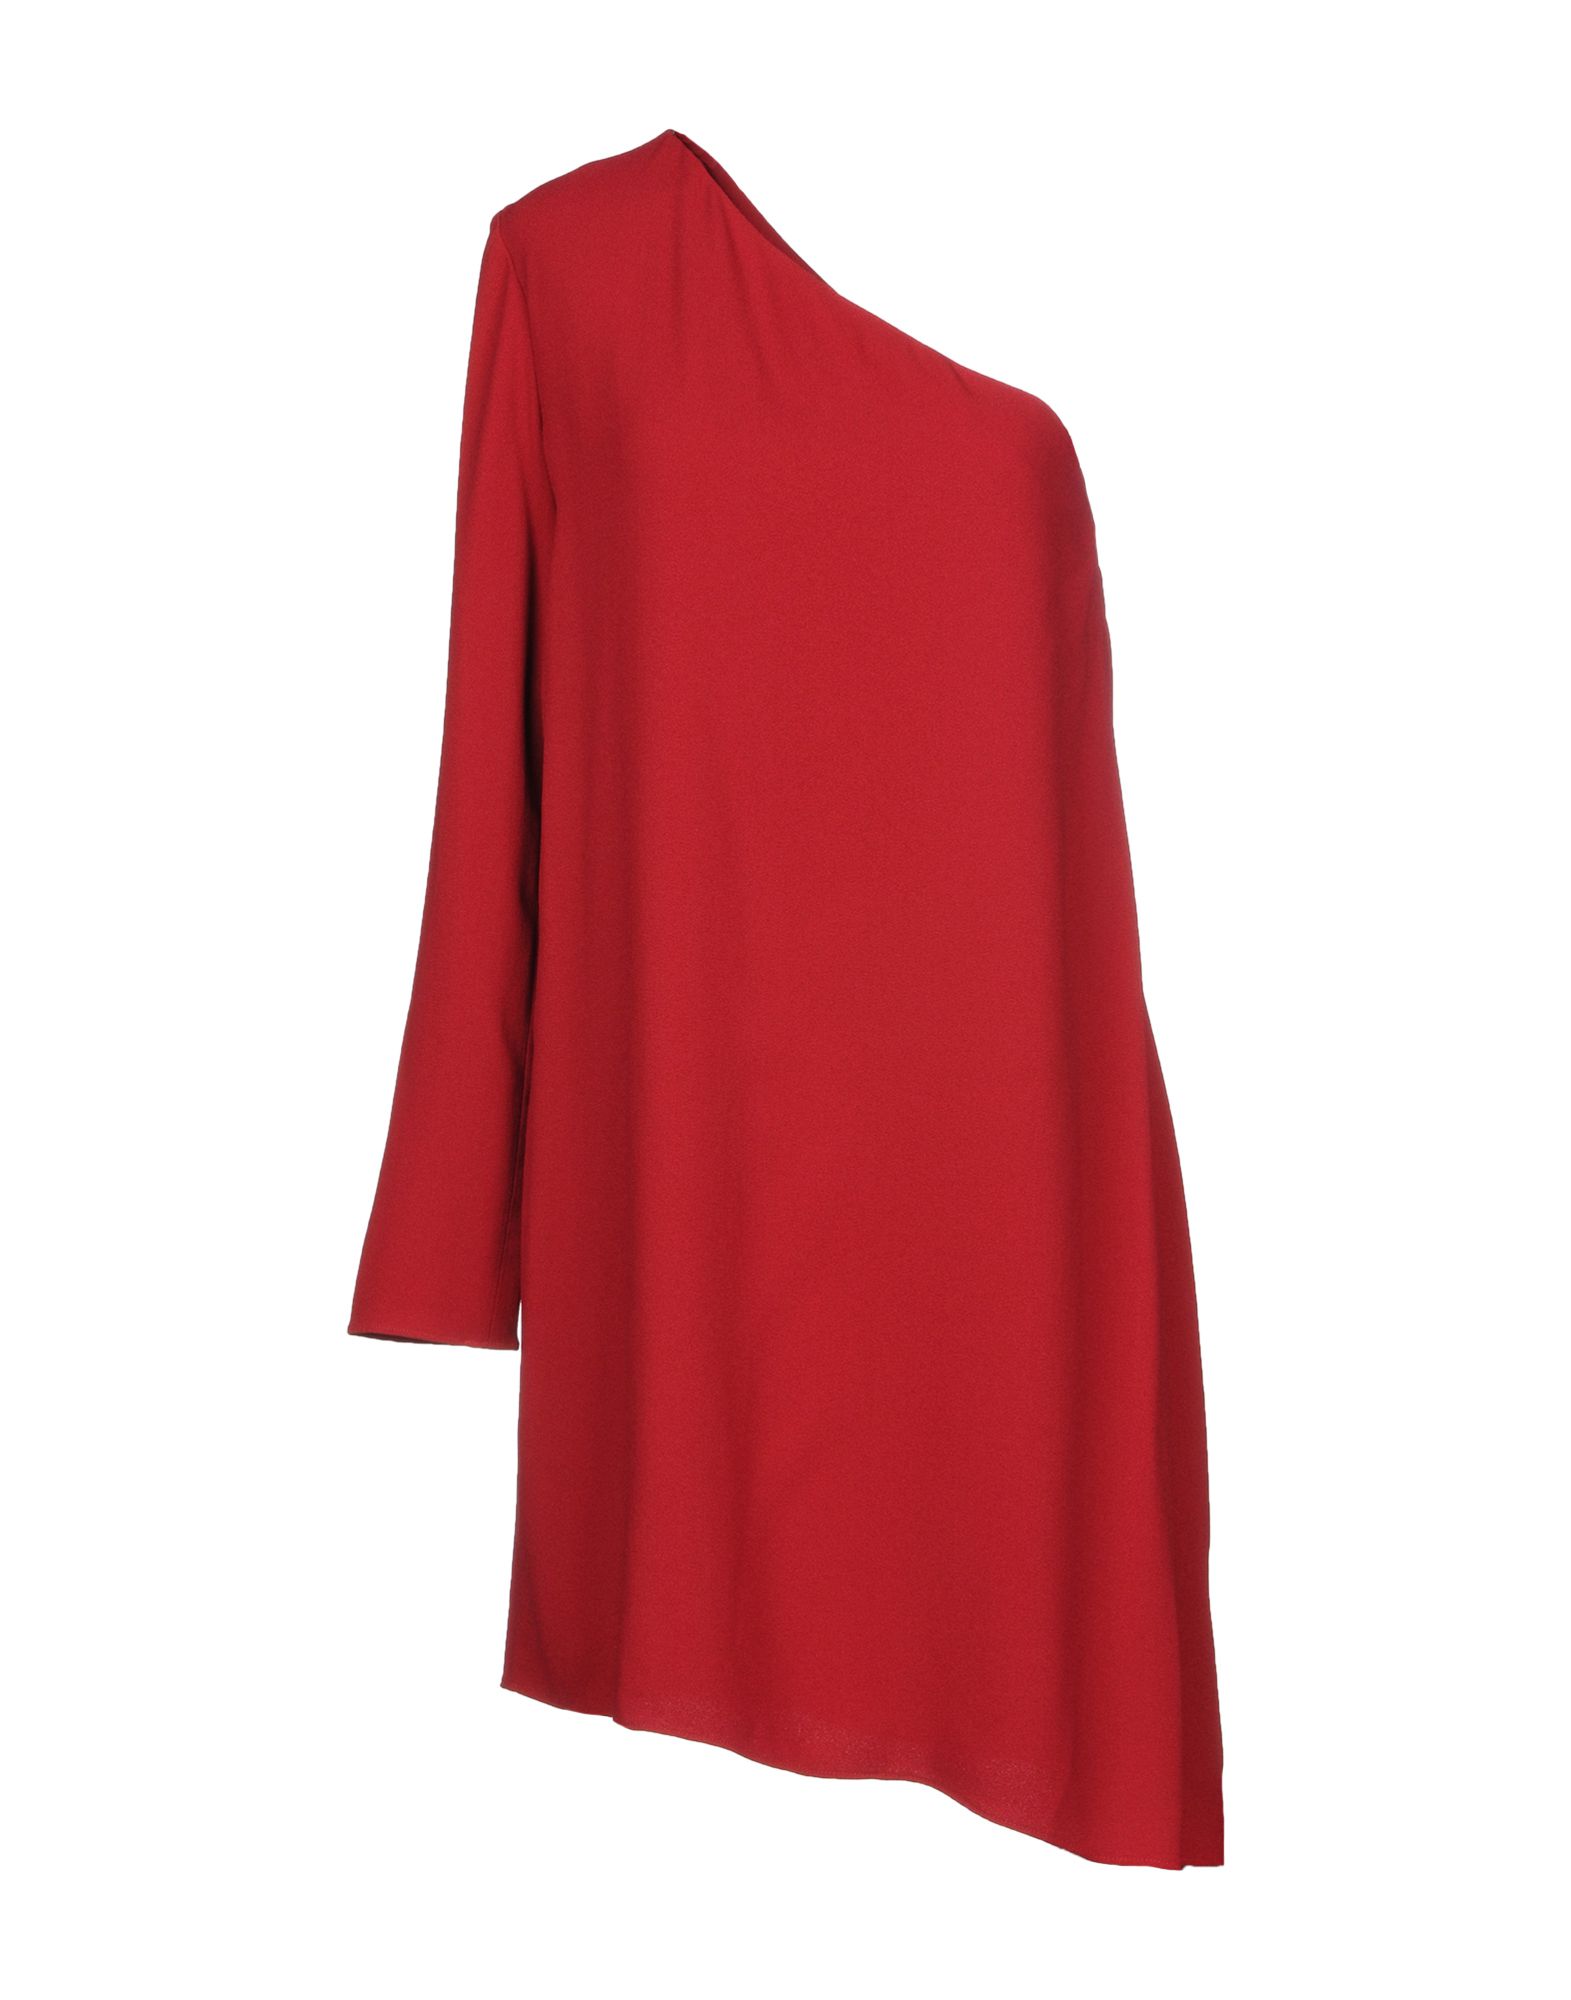 THEORY THEORY WOMAN SHORT DRESS RED SIZE 12 ACETATE, VISCOSE, POLYESTER,34858759TQ 2